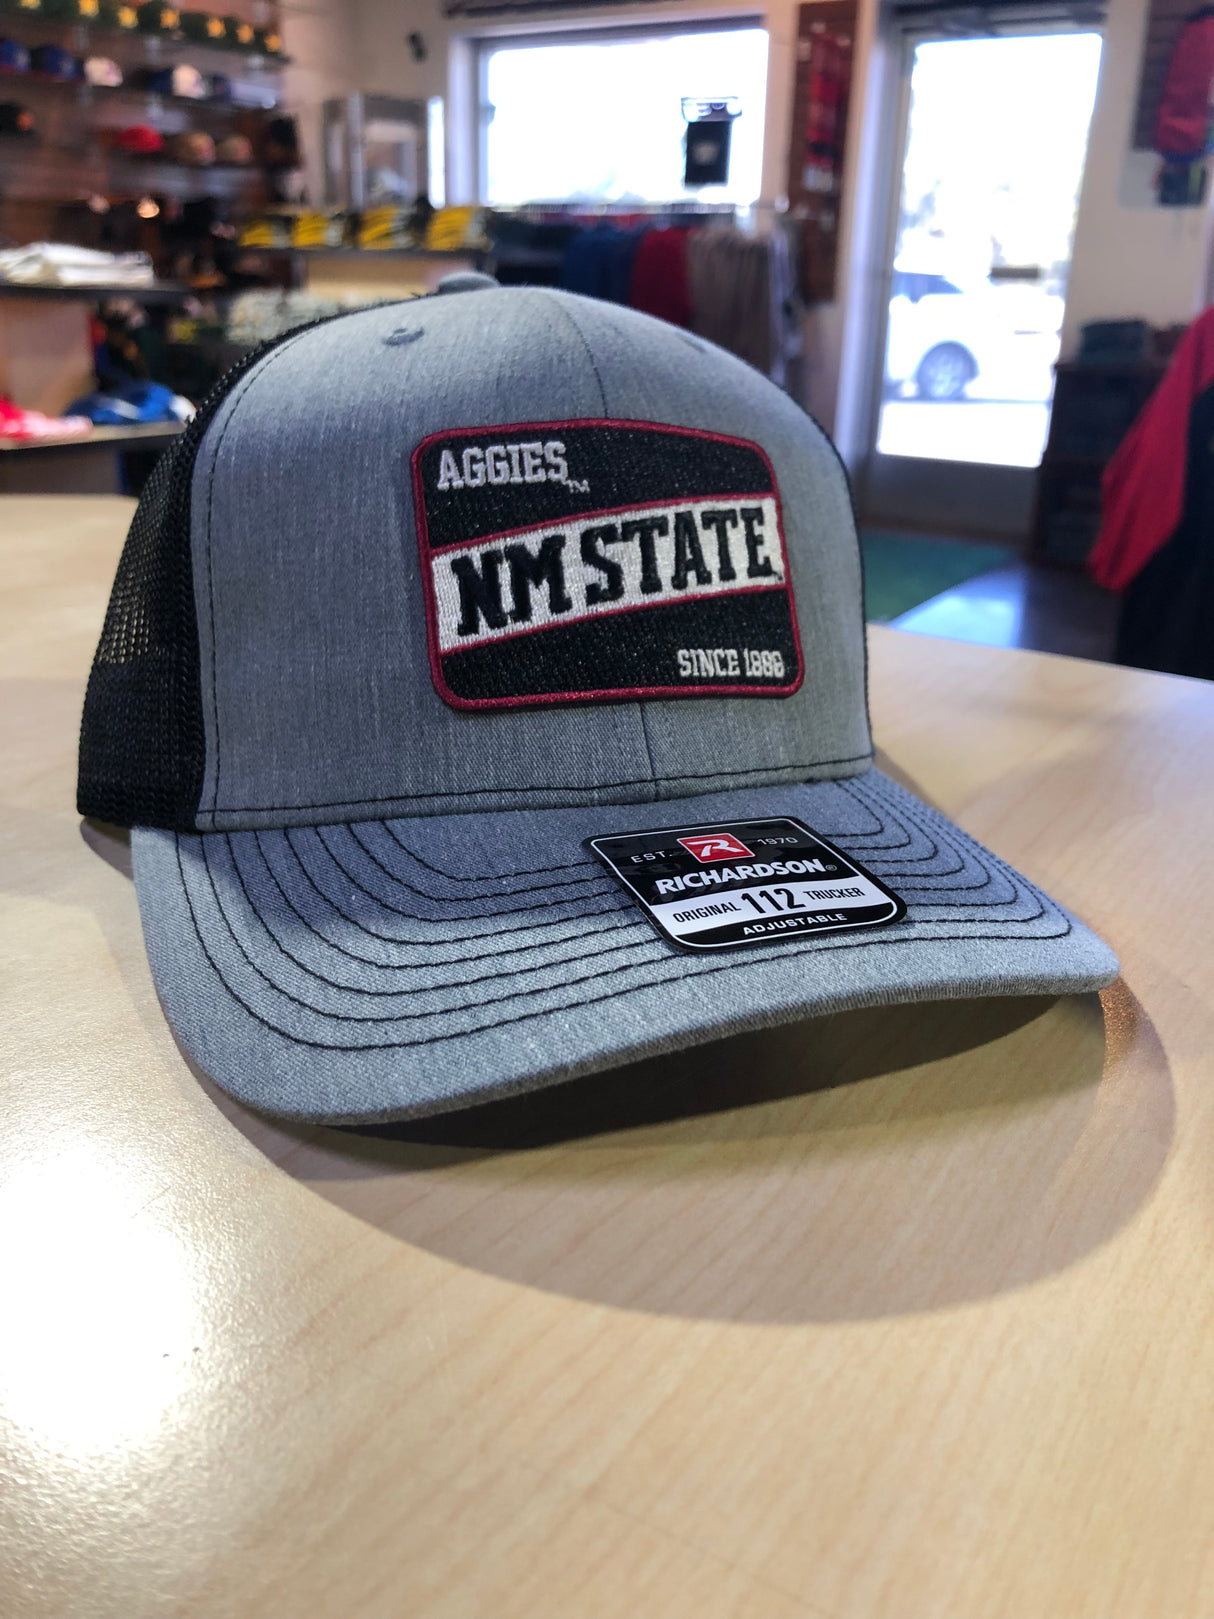 Aggies NM STATE Trucker Hat